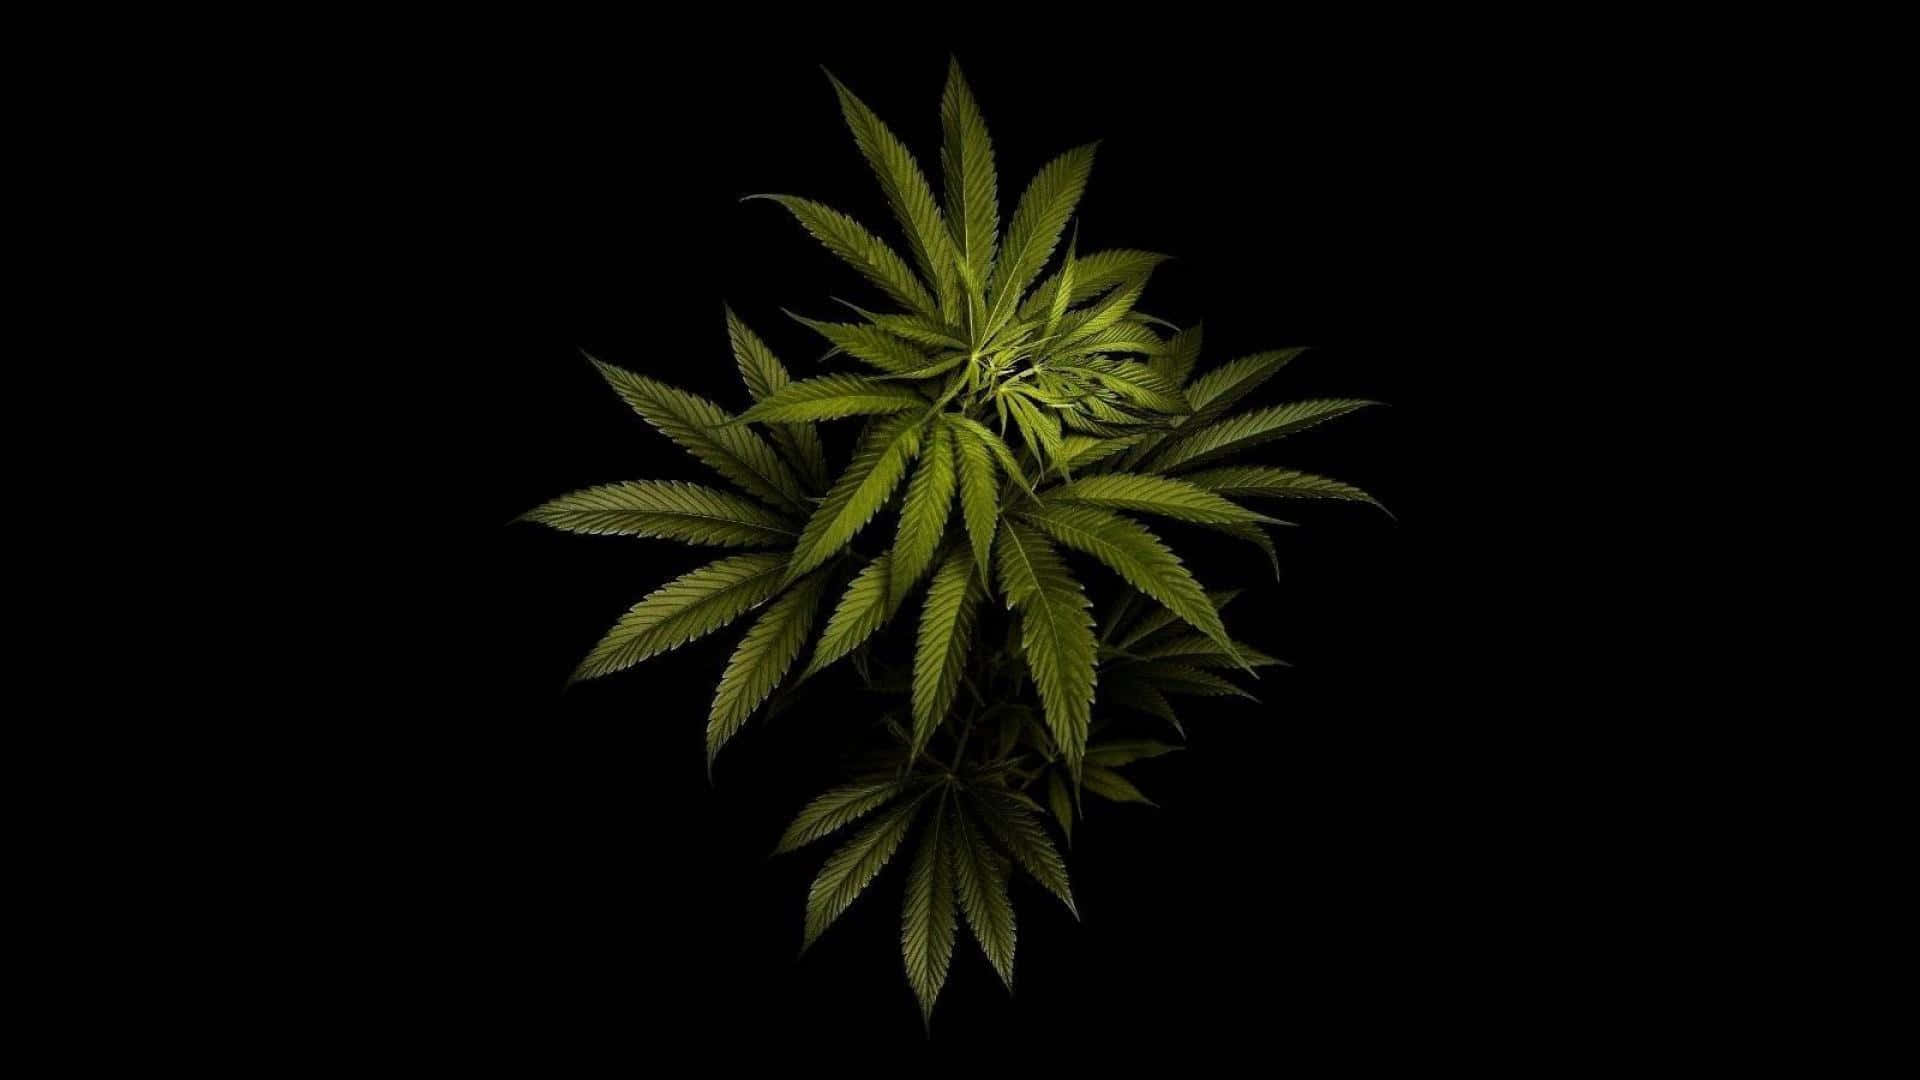 The Healing Power of Cannabis